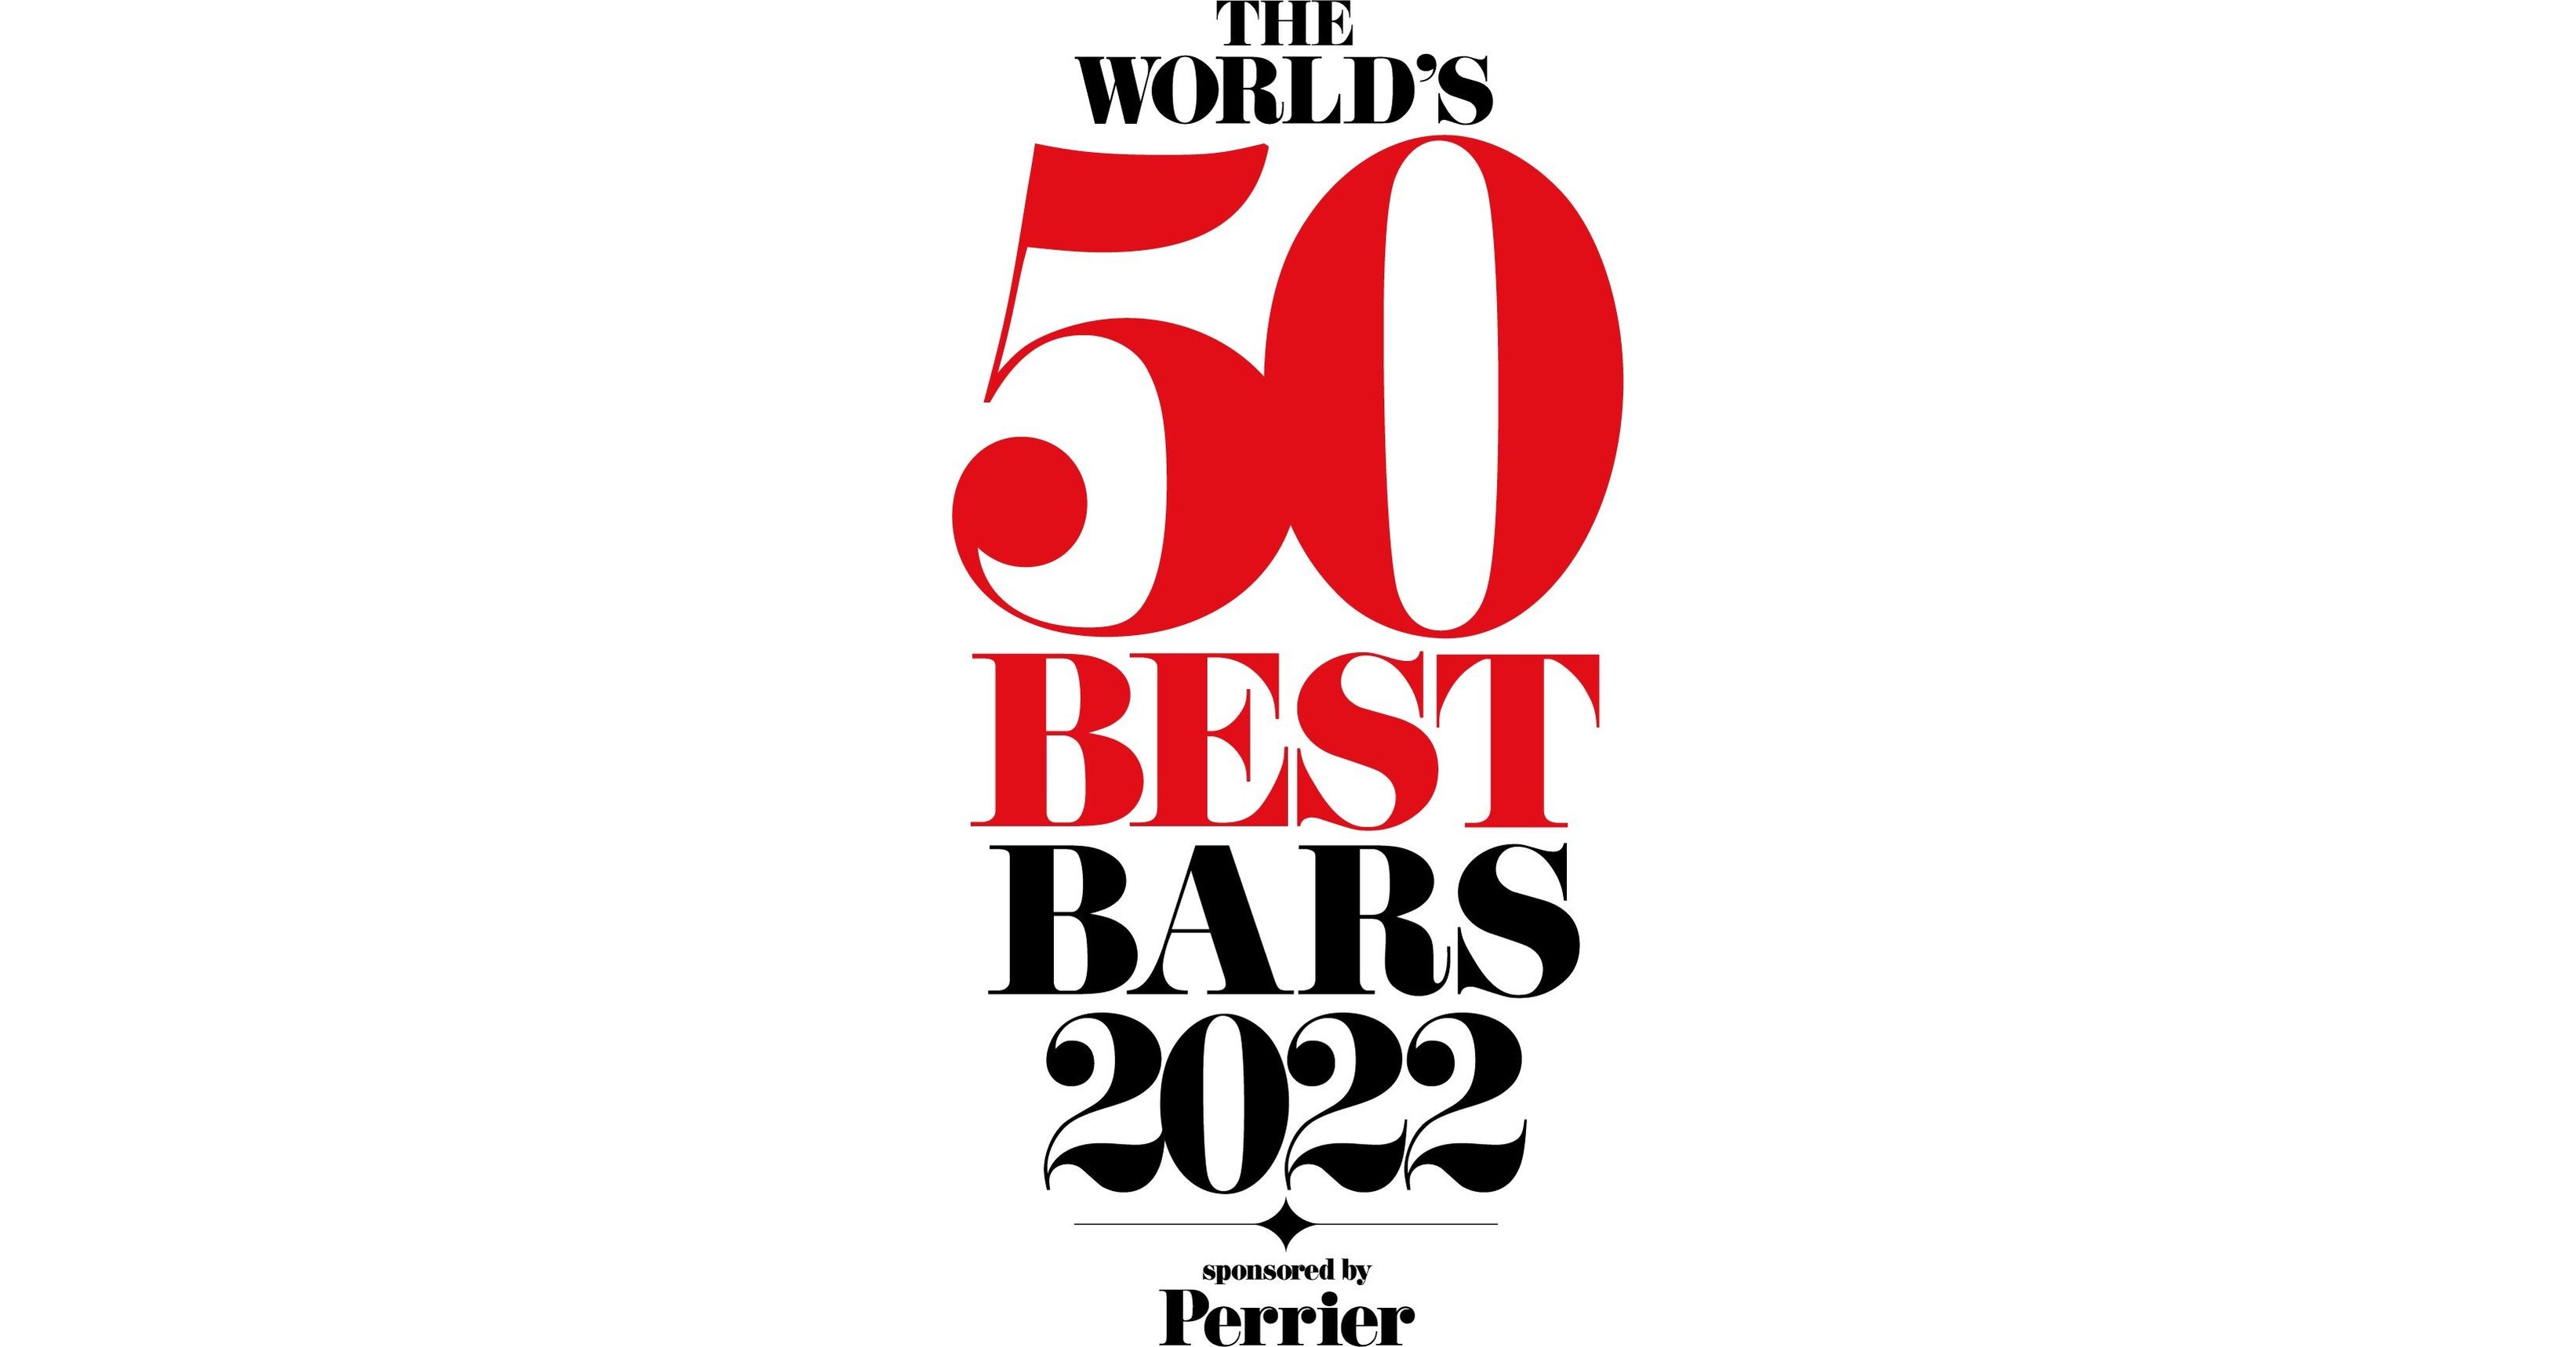 Zuma Dubai named among world's 50 best bars